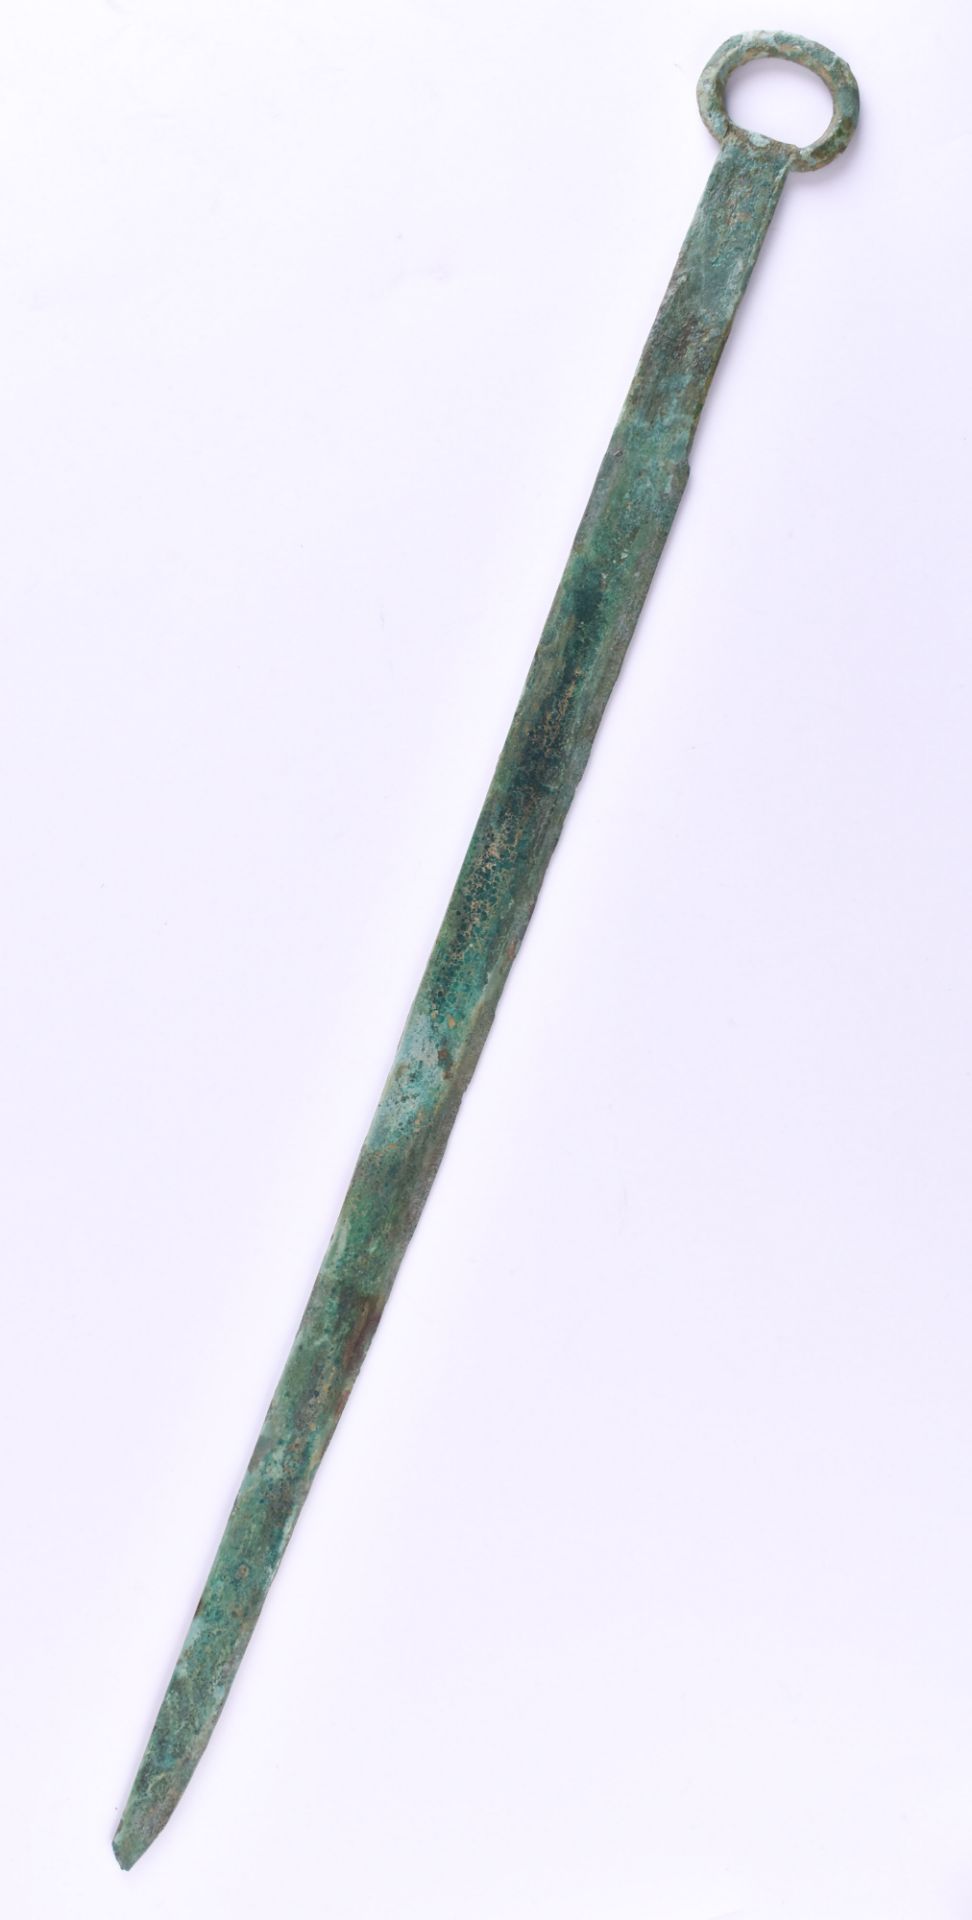  Bronze sword China Han dynasty